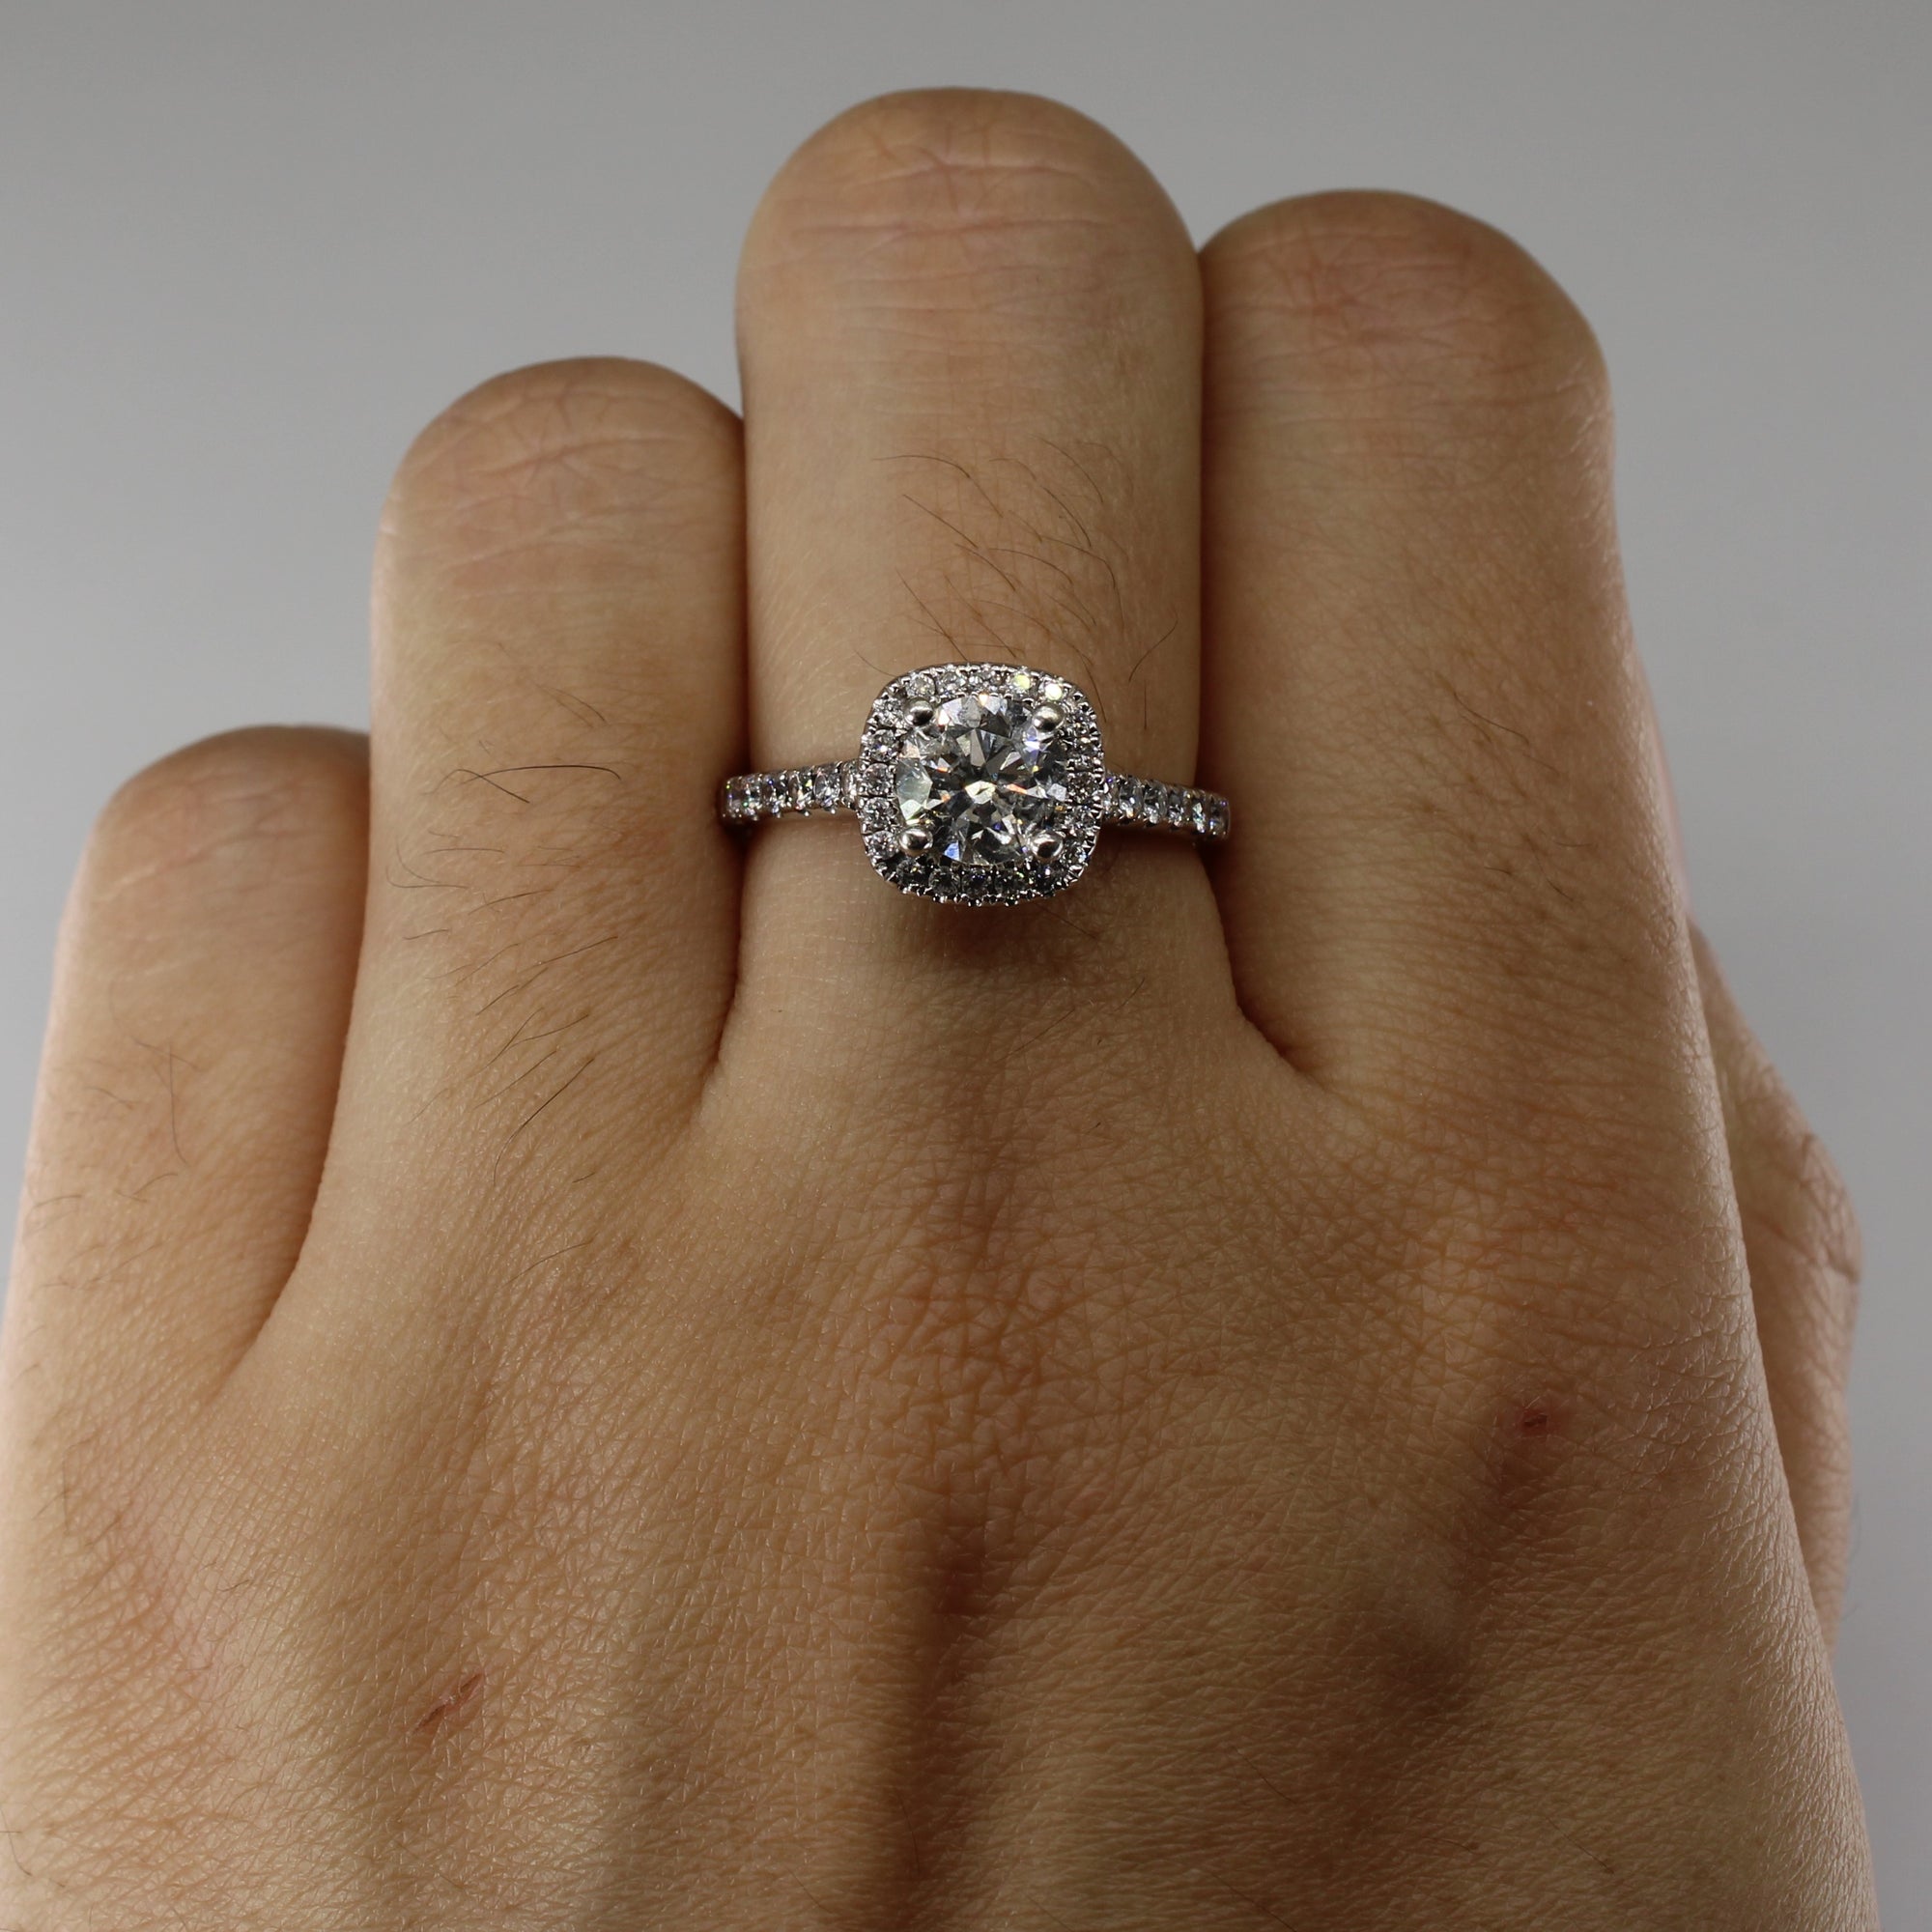 Canadian Halo Diamond Engagement 14k Ring | 1.28ctw | SZ 6.5 |